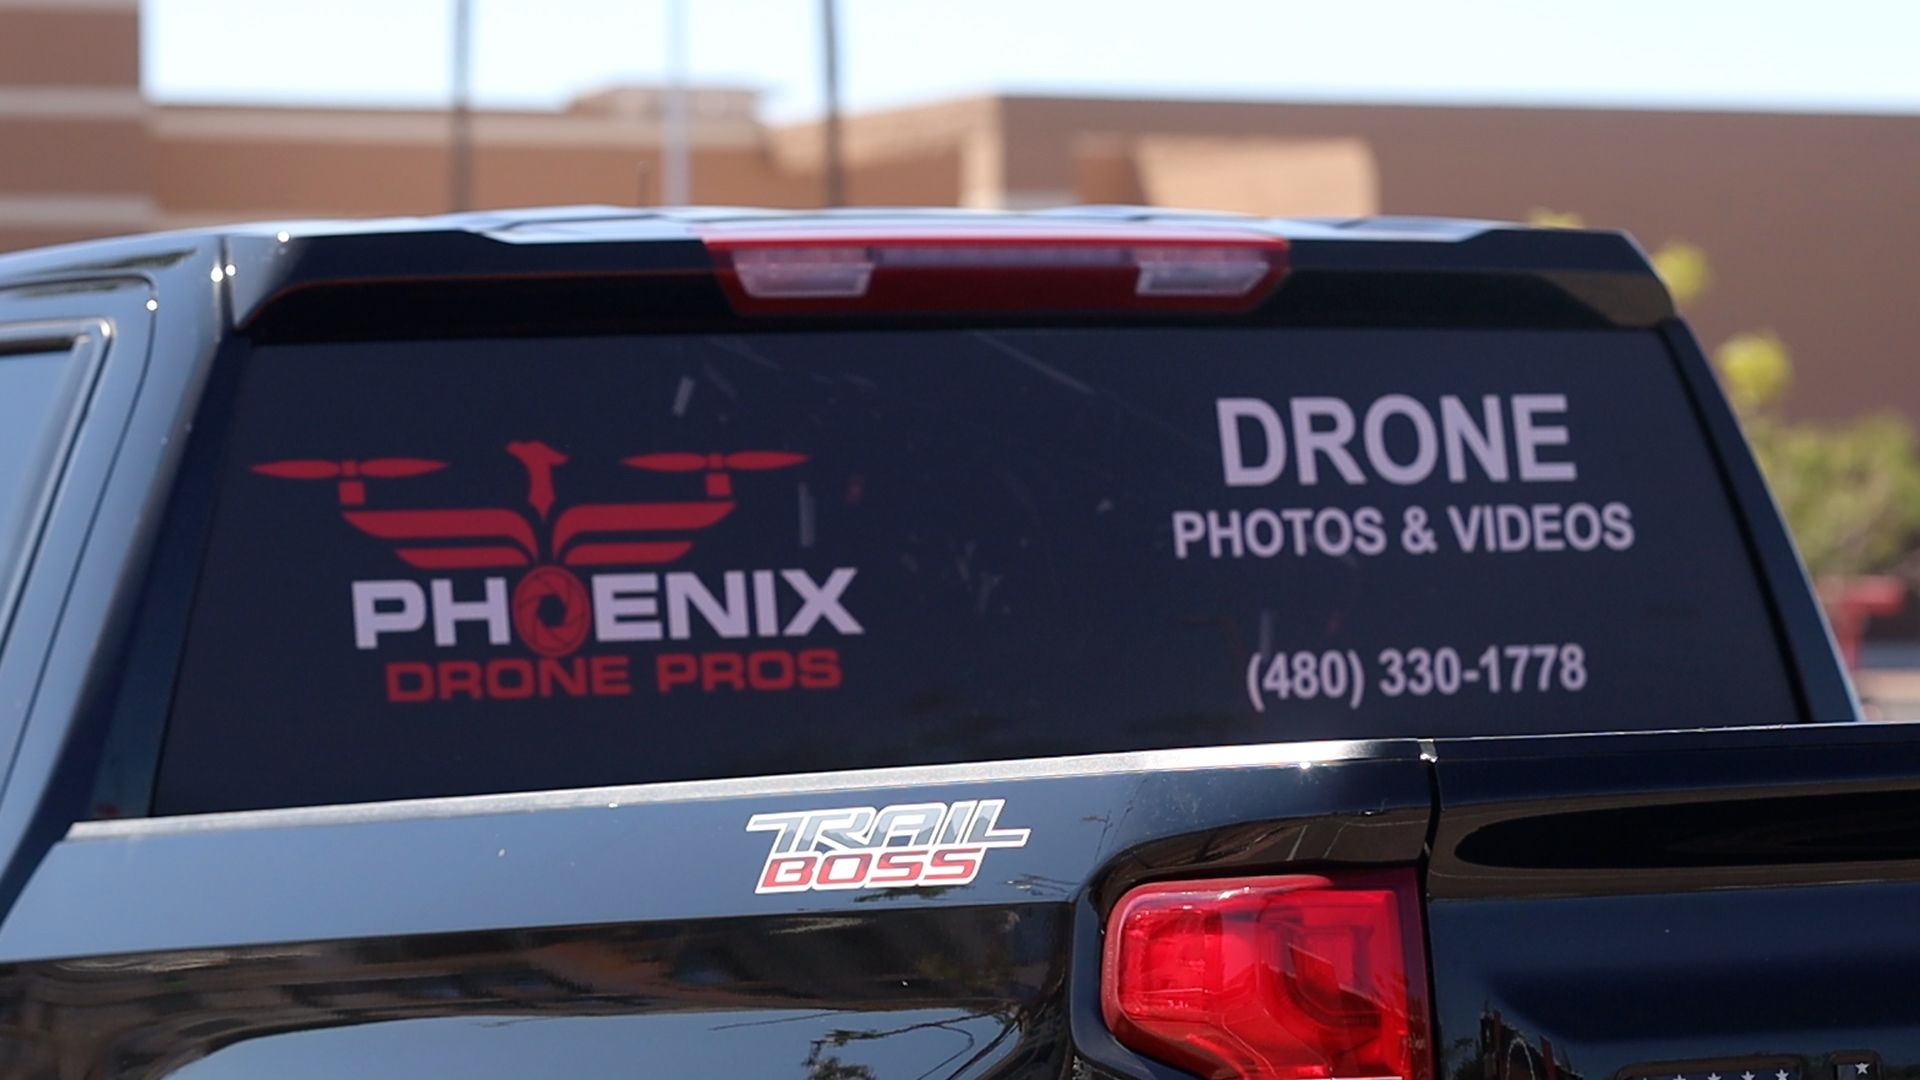 Phoenix Drone Pros Truck